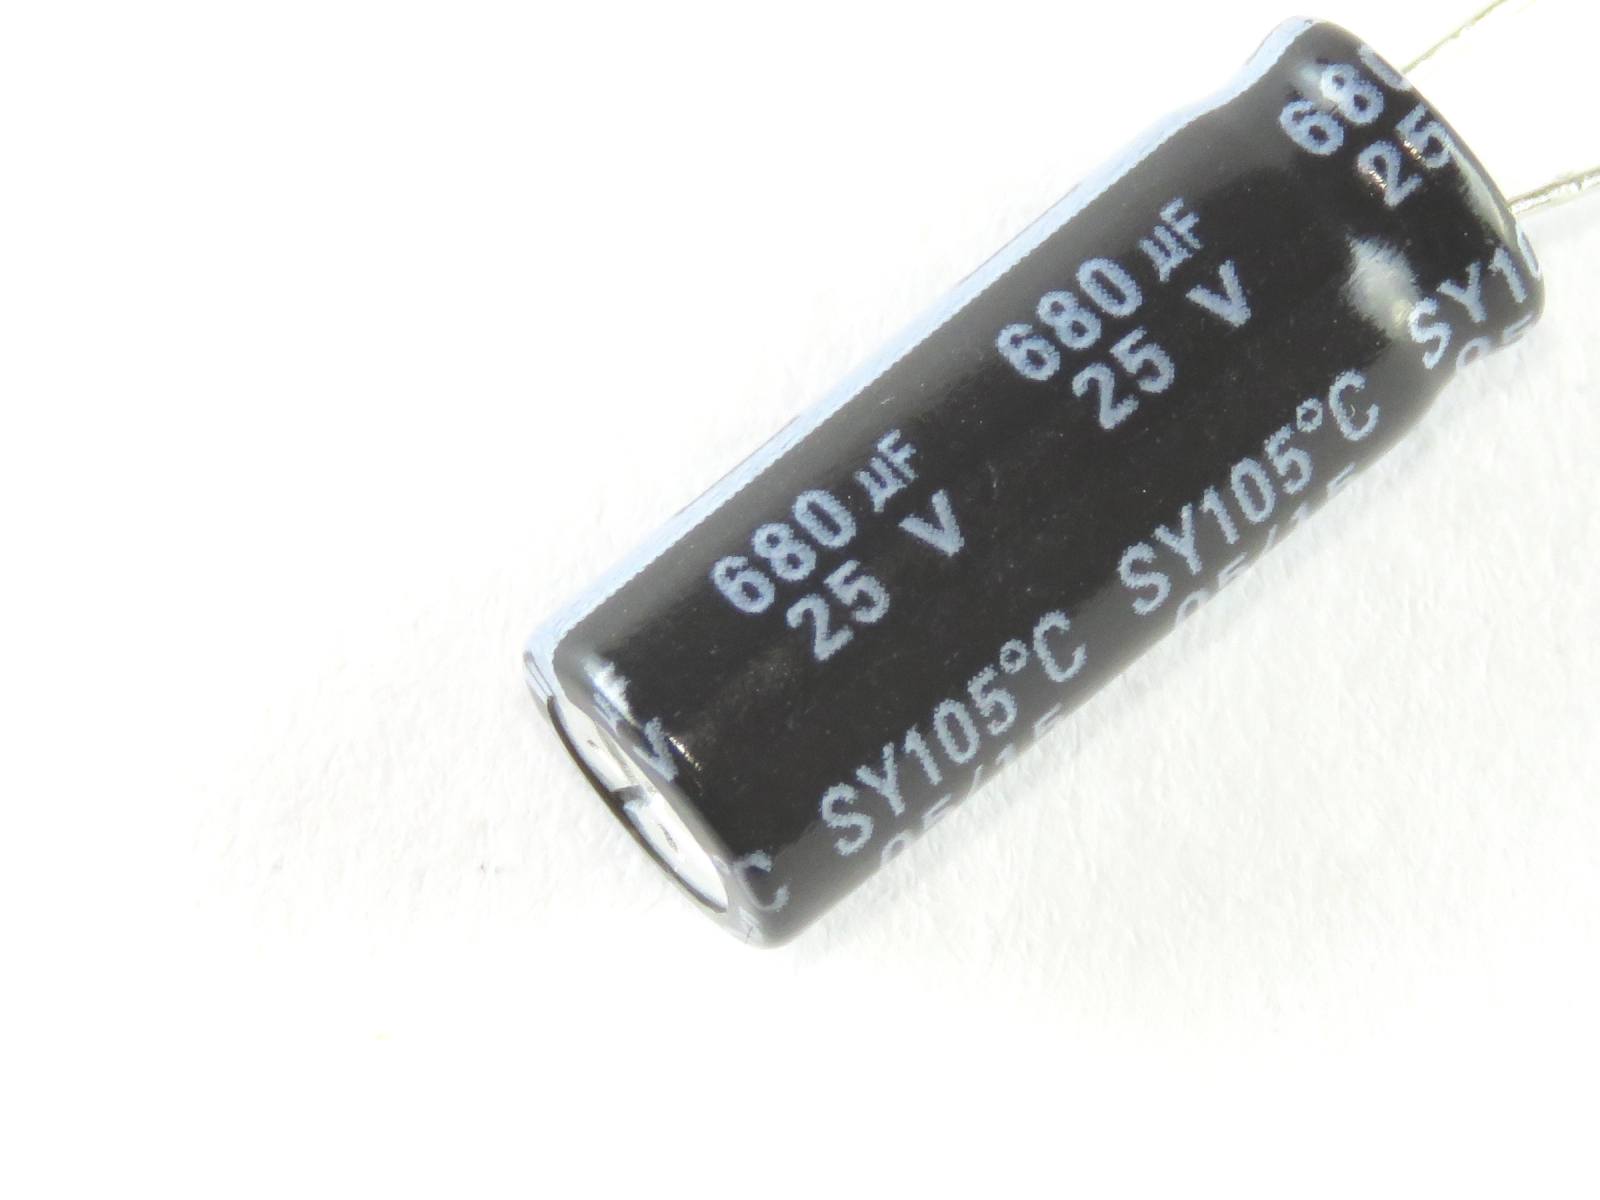 Condensateur chimique 680uF 25V DSY687M025S1A5G20K (image 2/2)